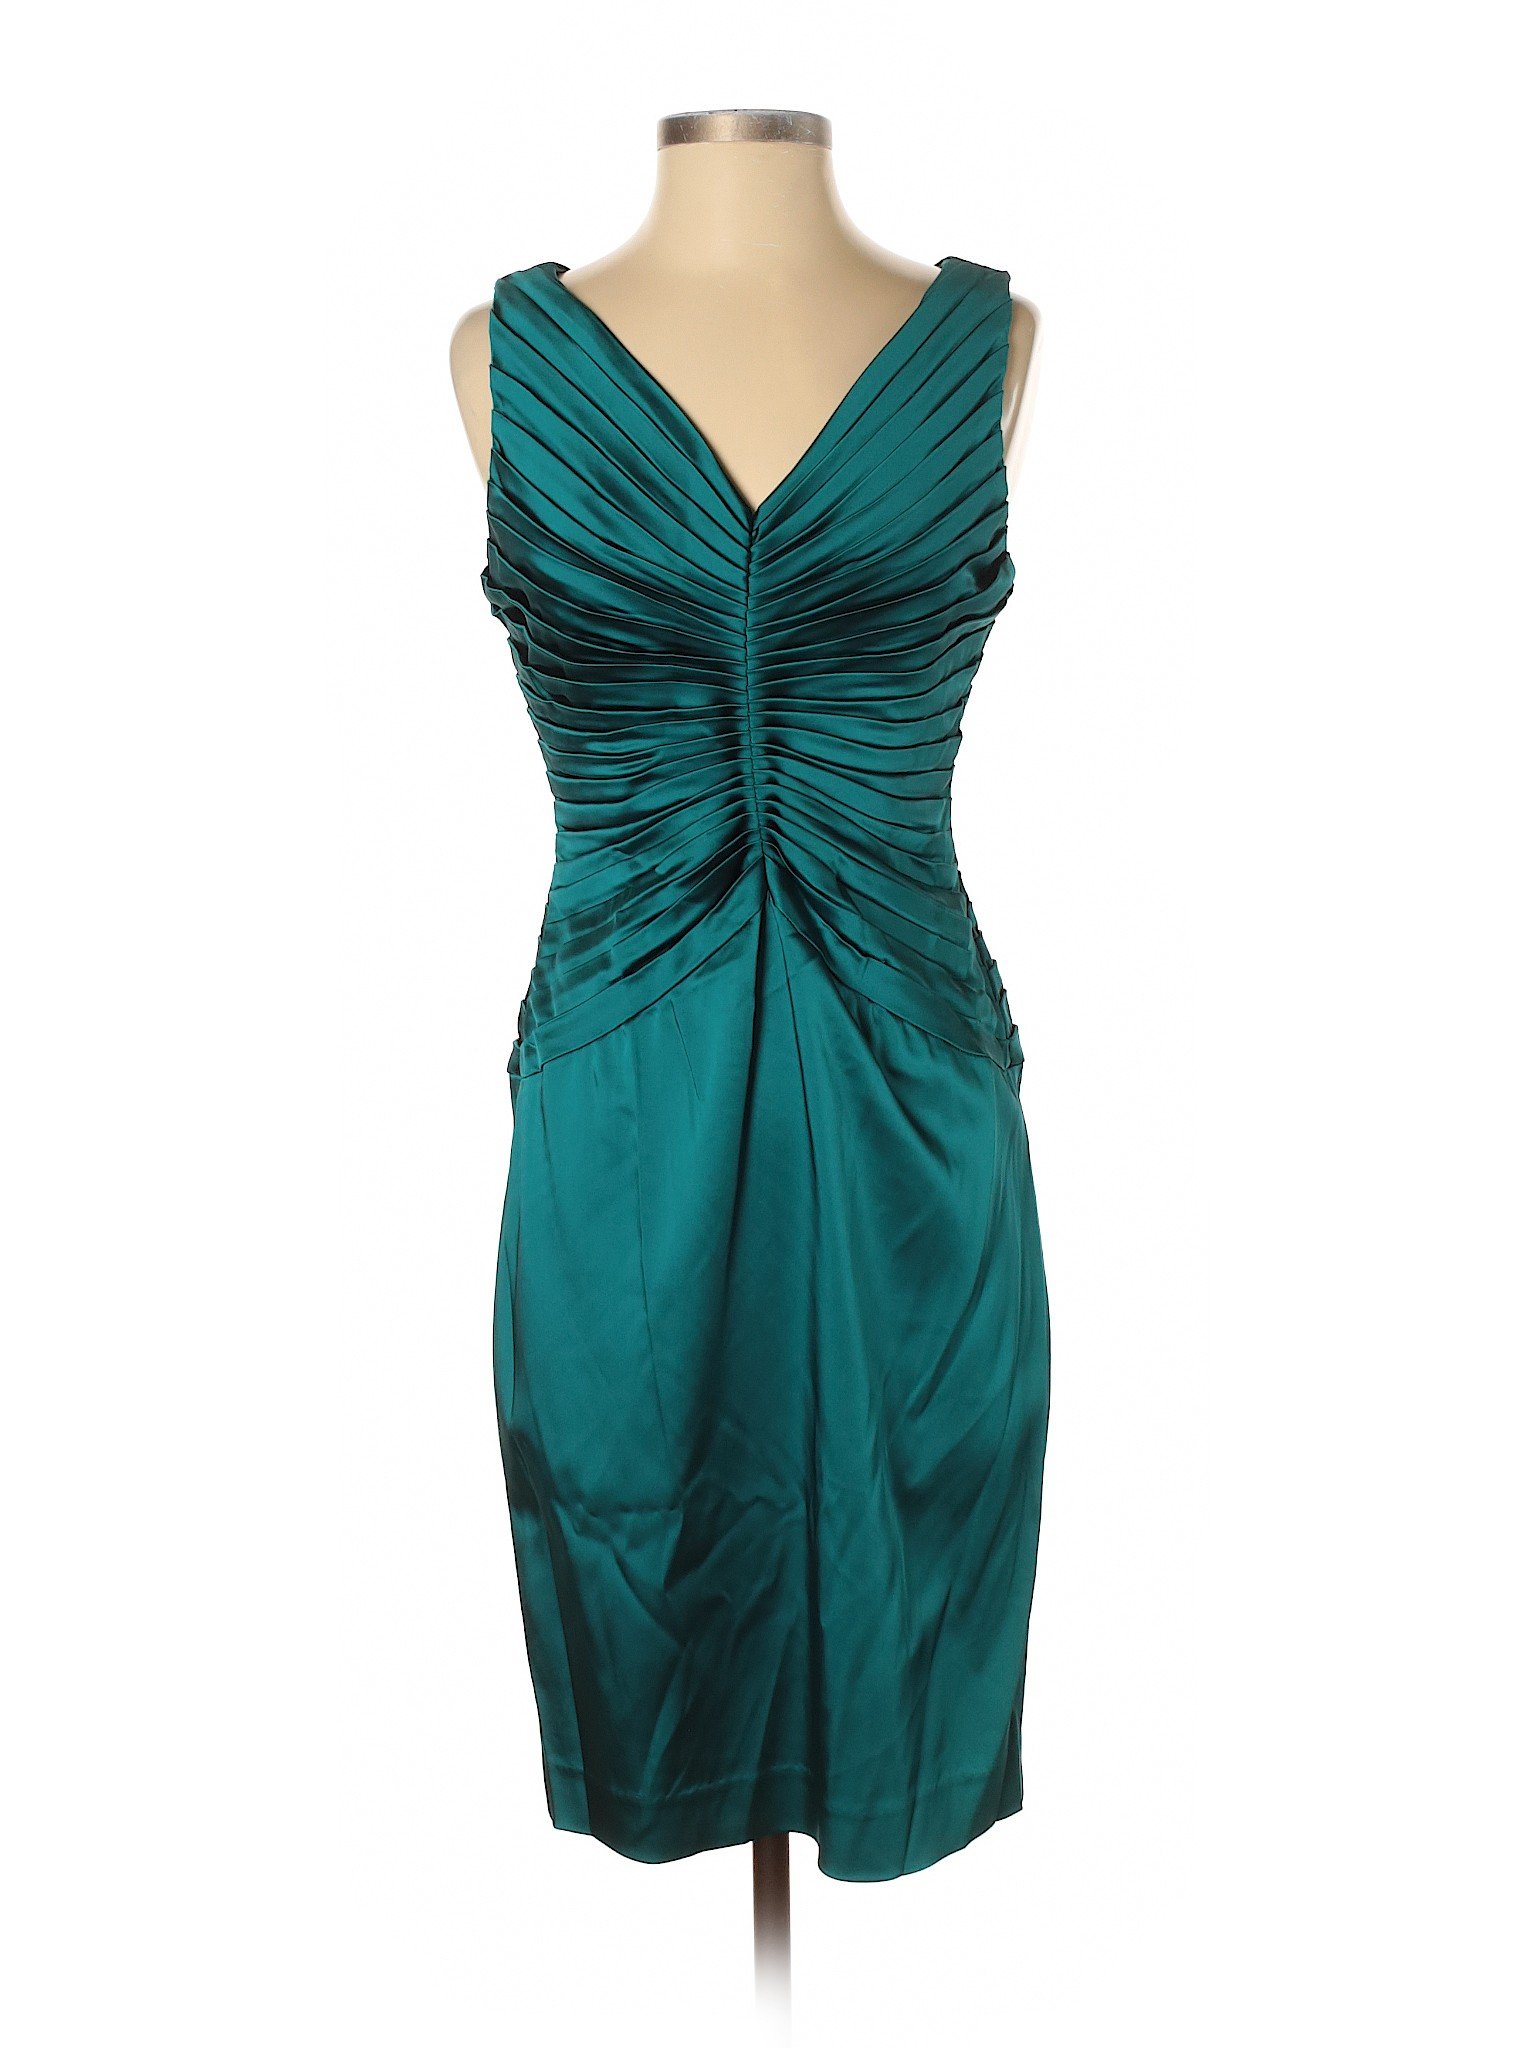 Calvin Klein Women Green Cocktail Dress 4 | eBay